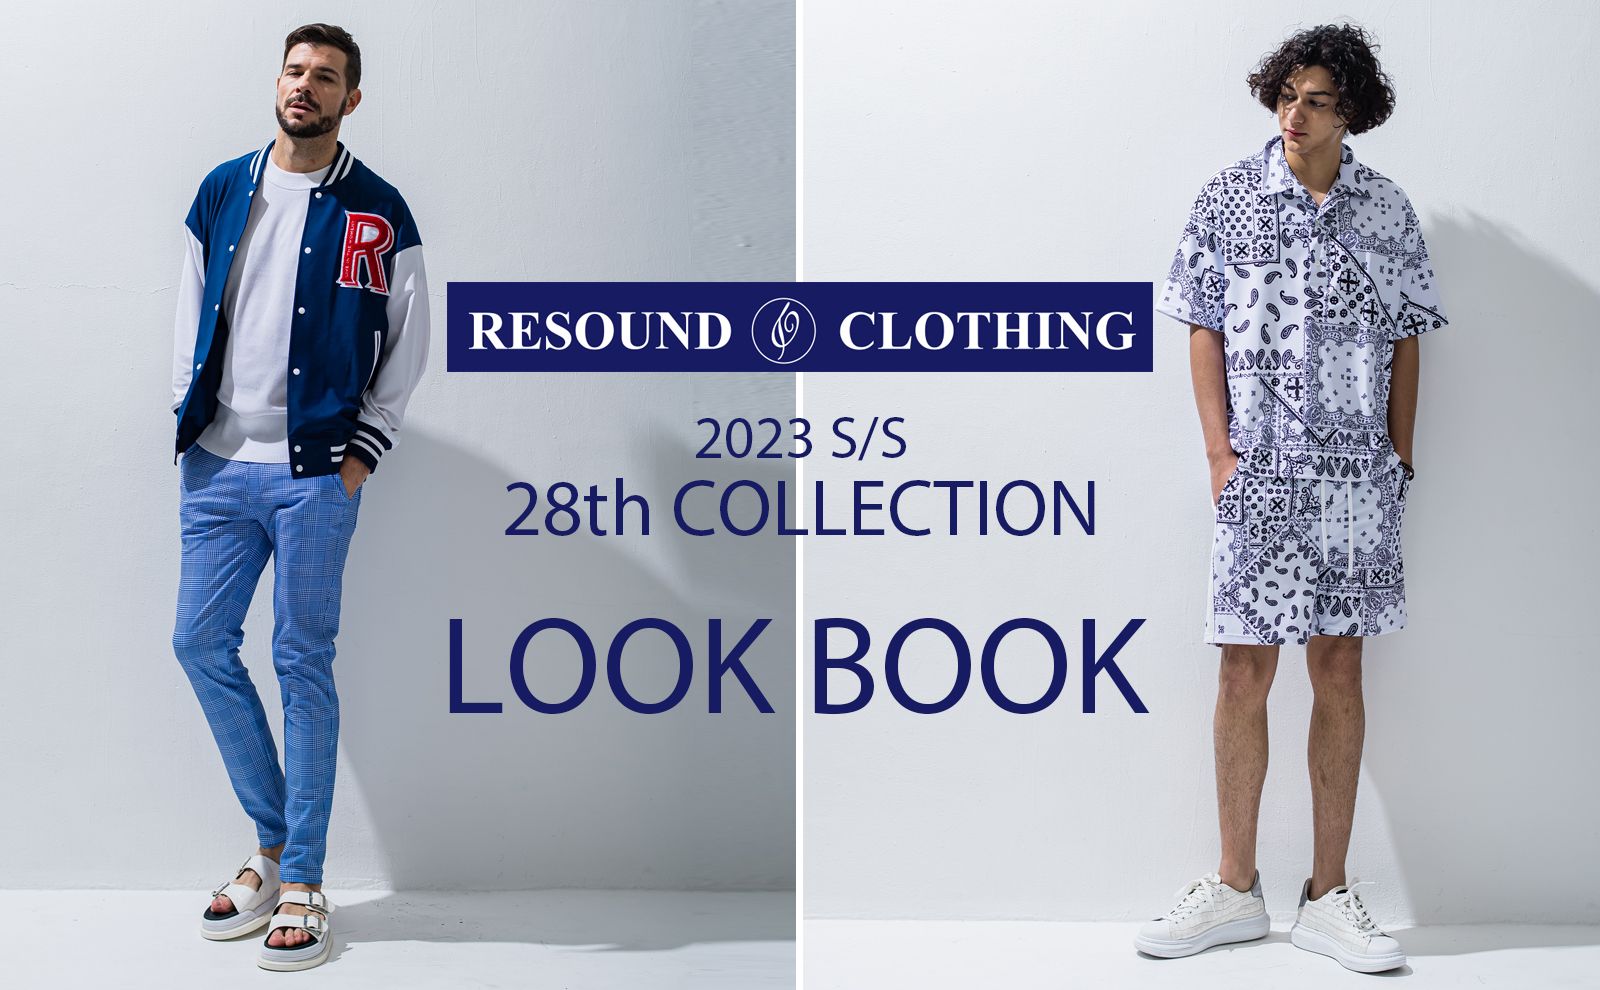 RESOUND CLOTHING - リサウンドクロージング | 正規通販『femt(フェムト)』